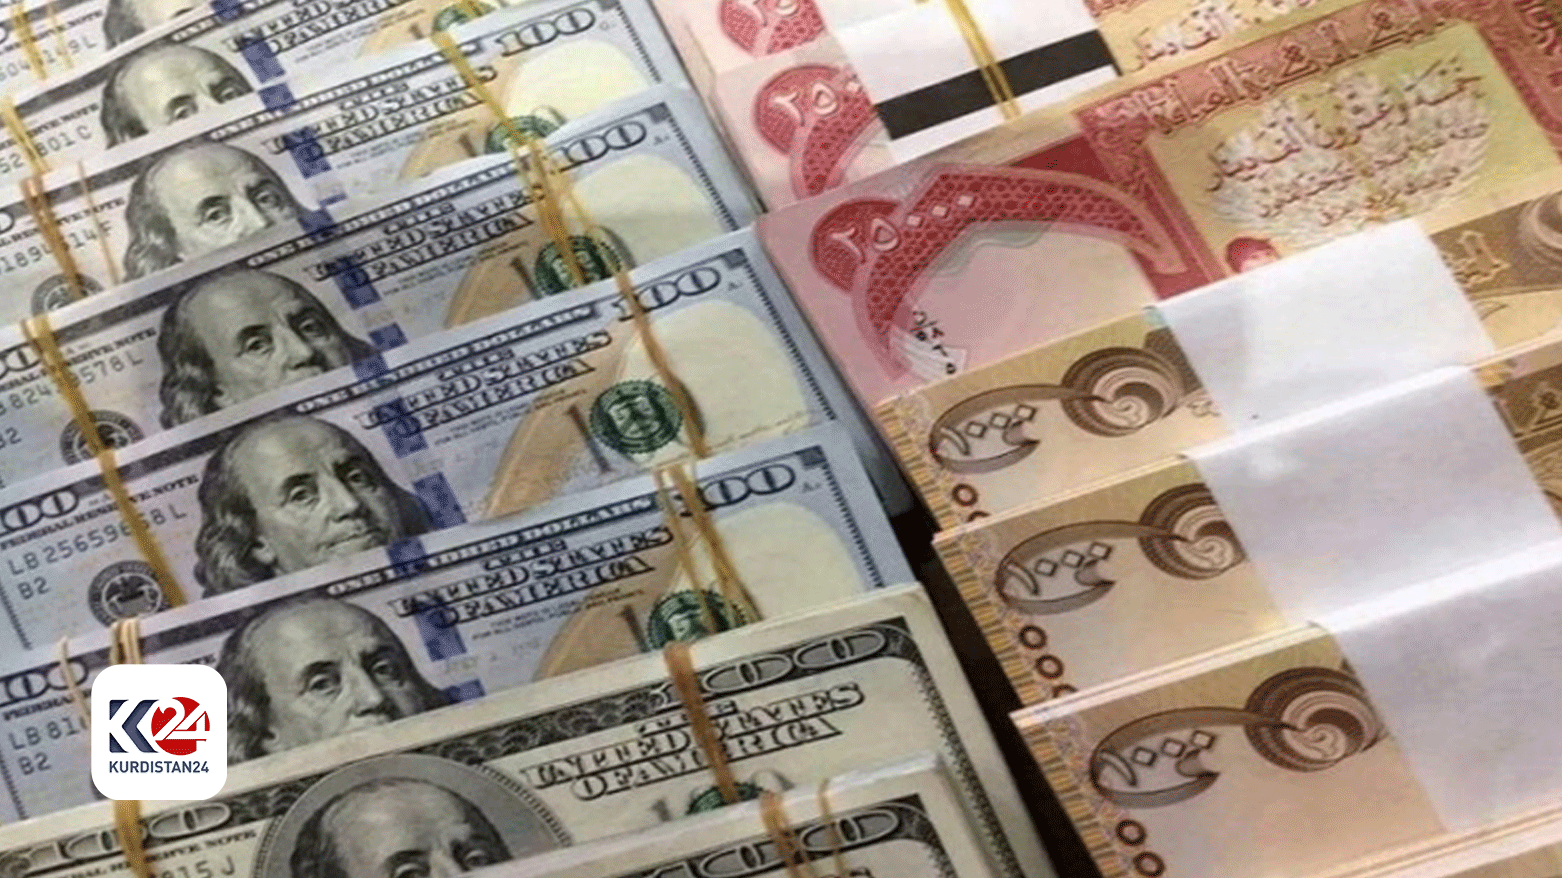 US dollar (left) besides Iraqi dinars. (Photo: Kurdistan24)